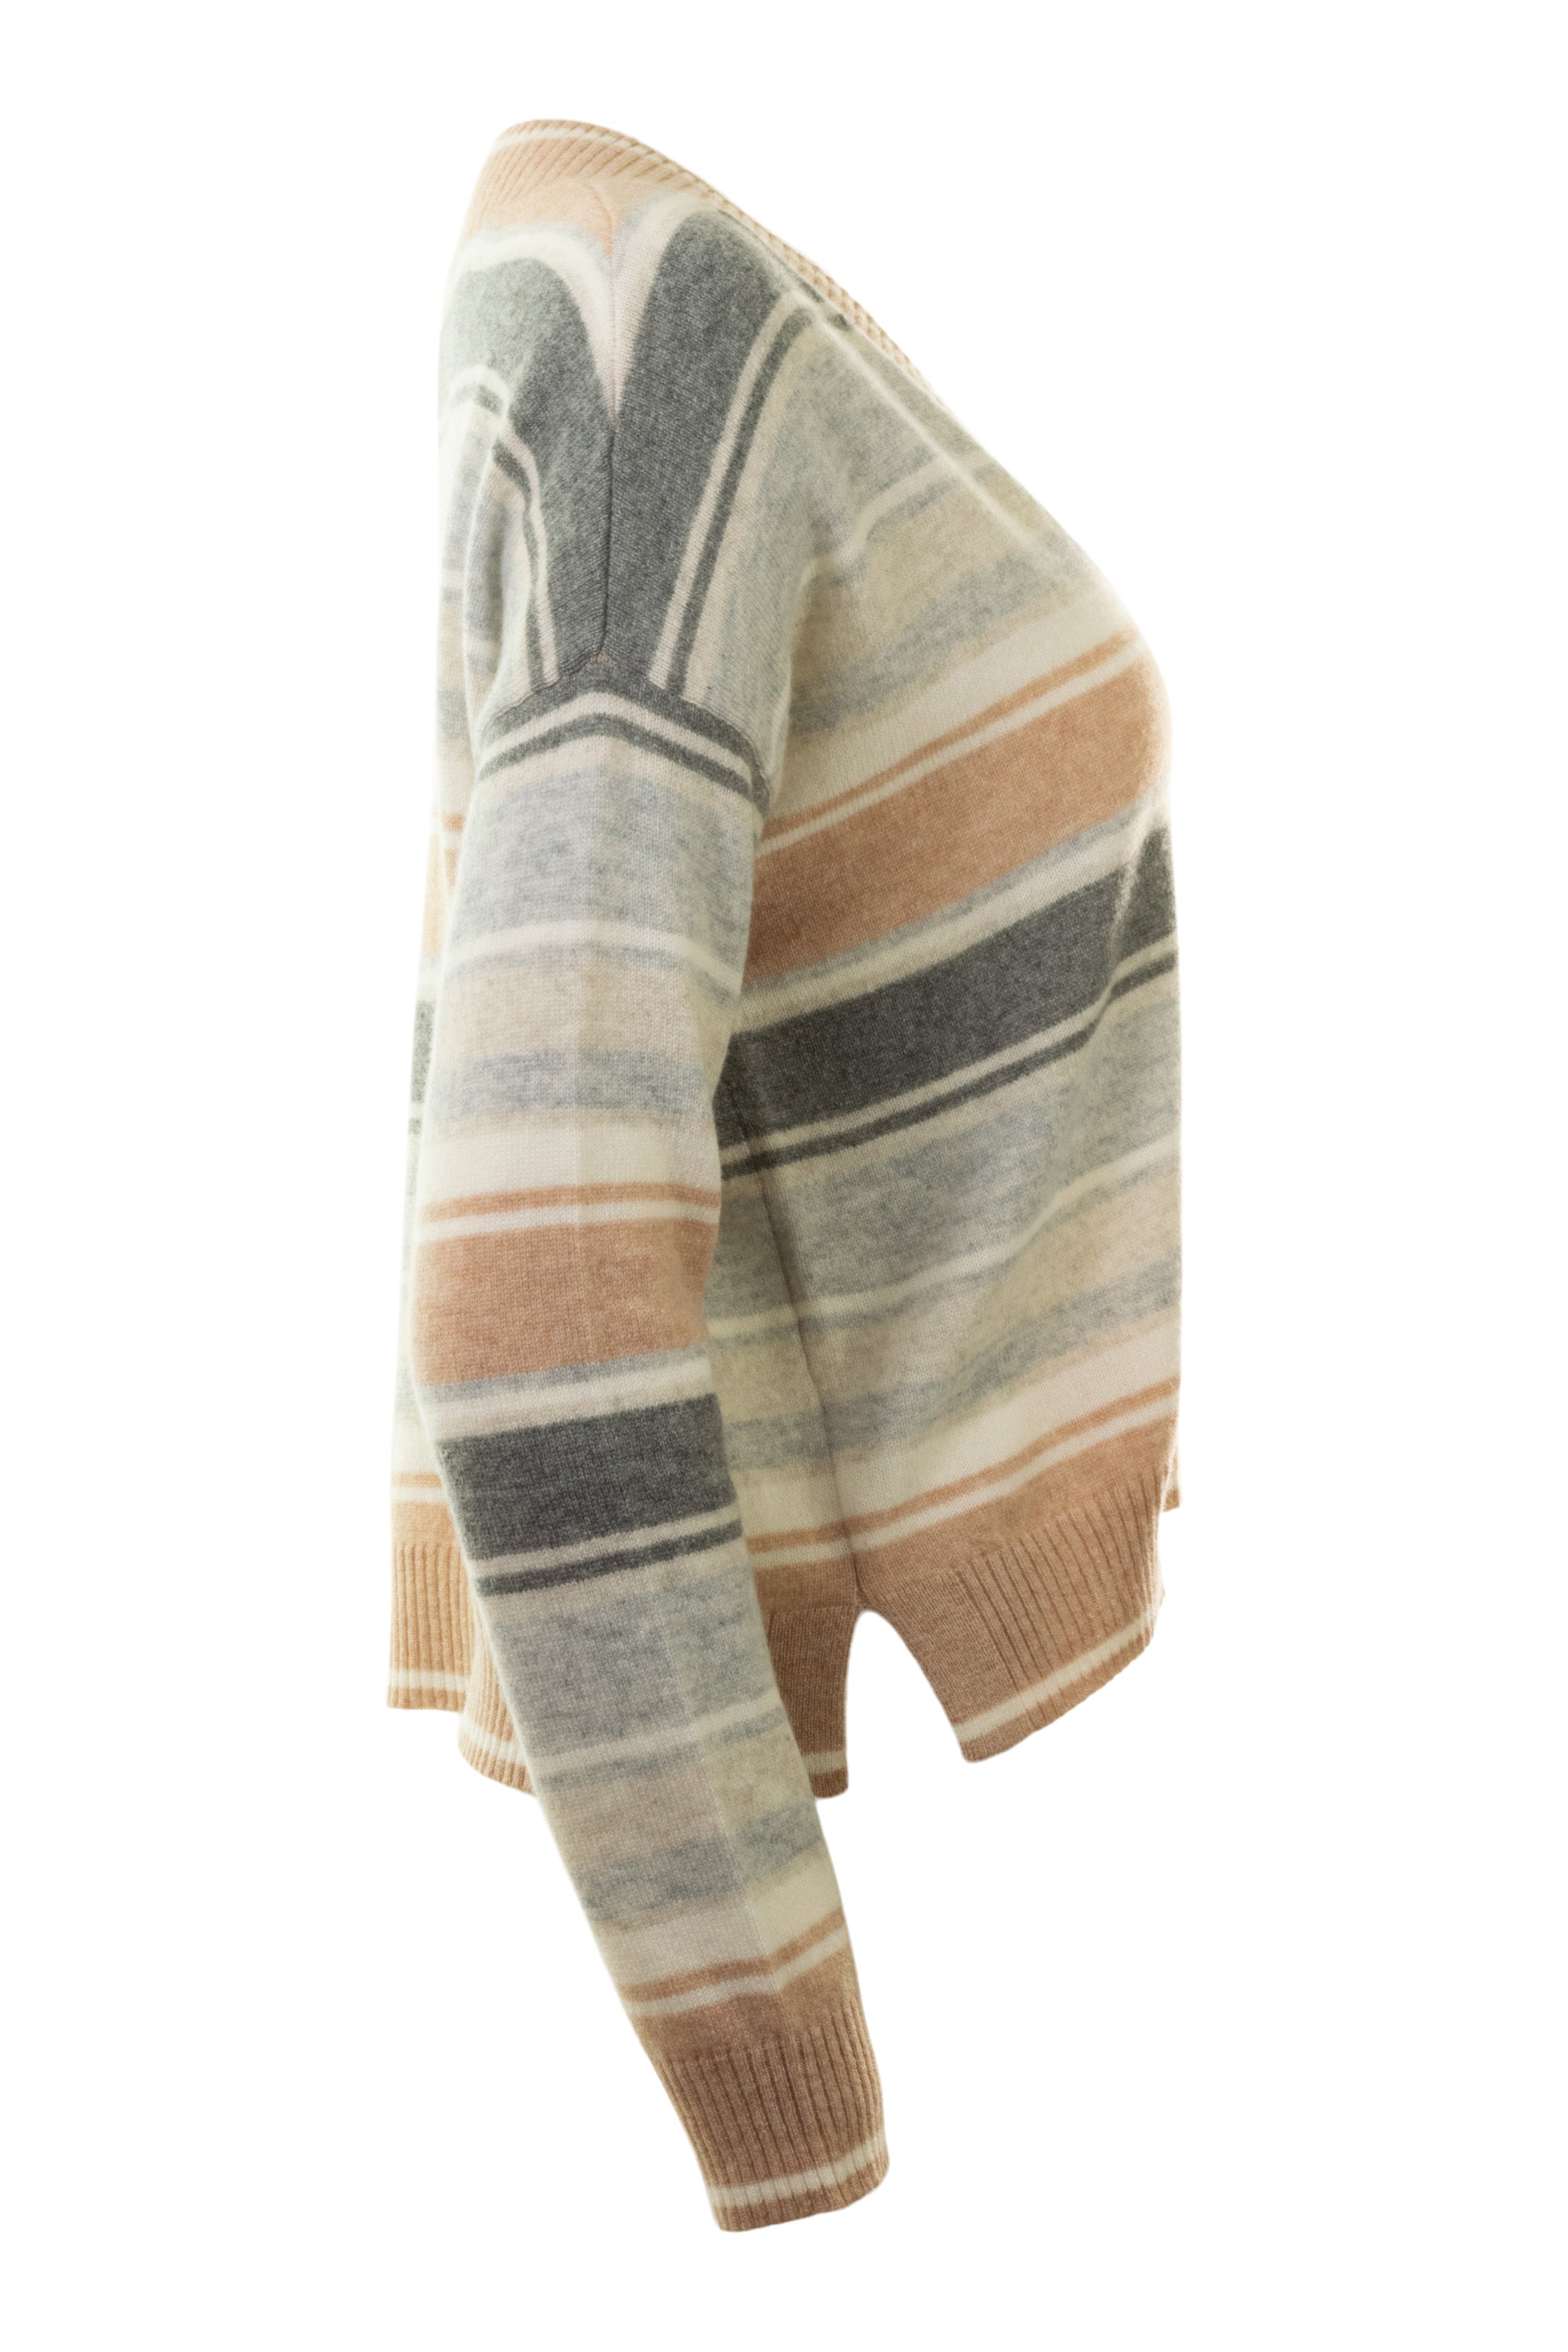 Autumn Cashmere Multi Stripe Vneck Sweater in Neutral Combo